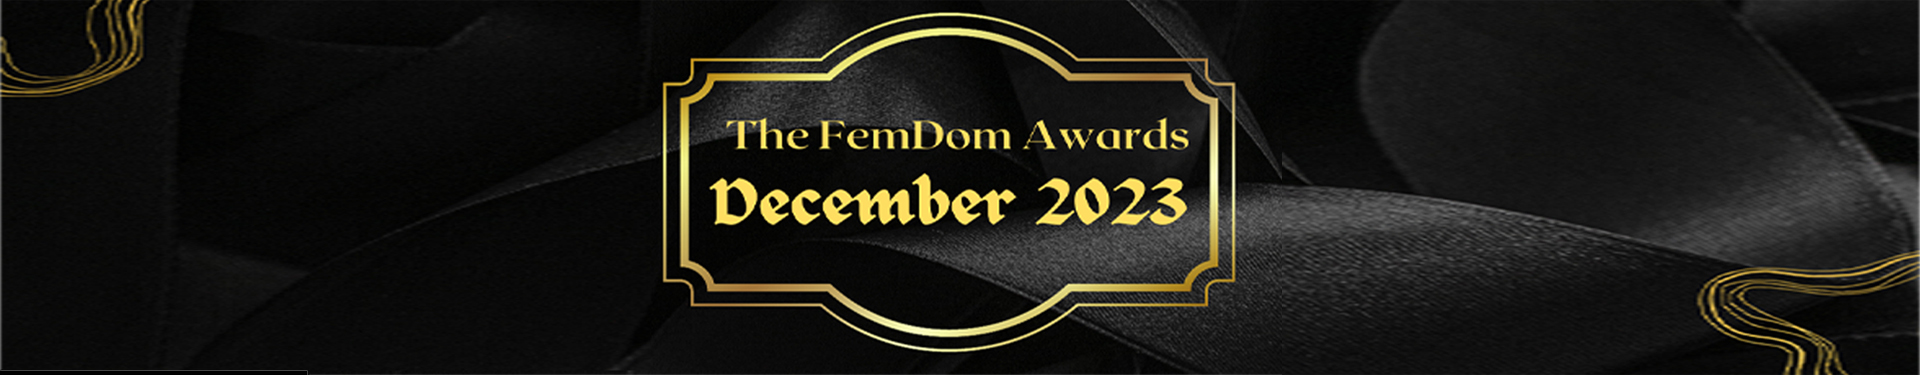 The Femdom Awards